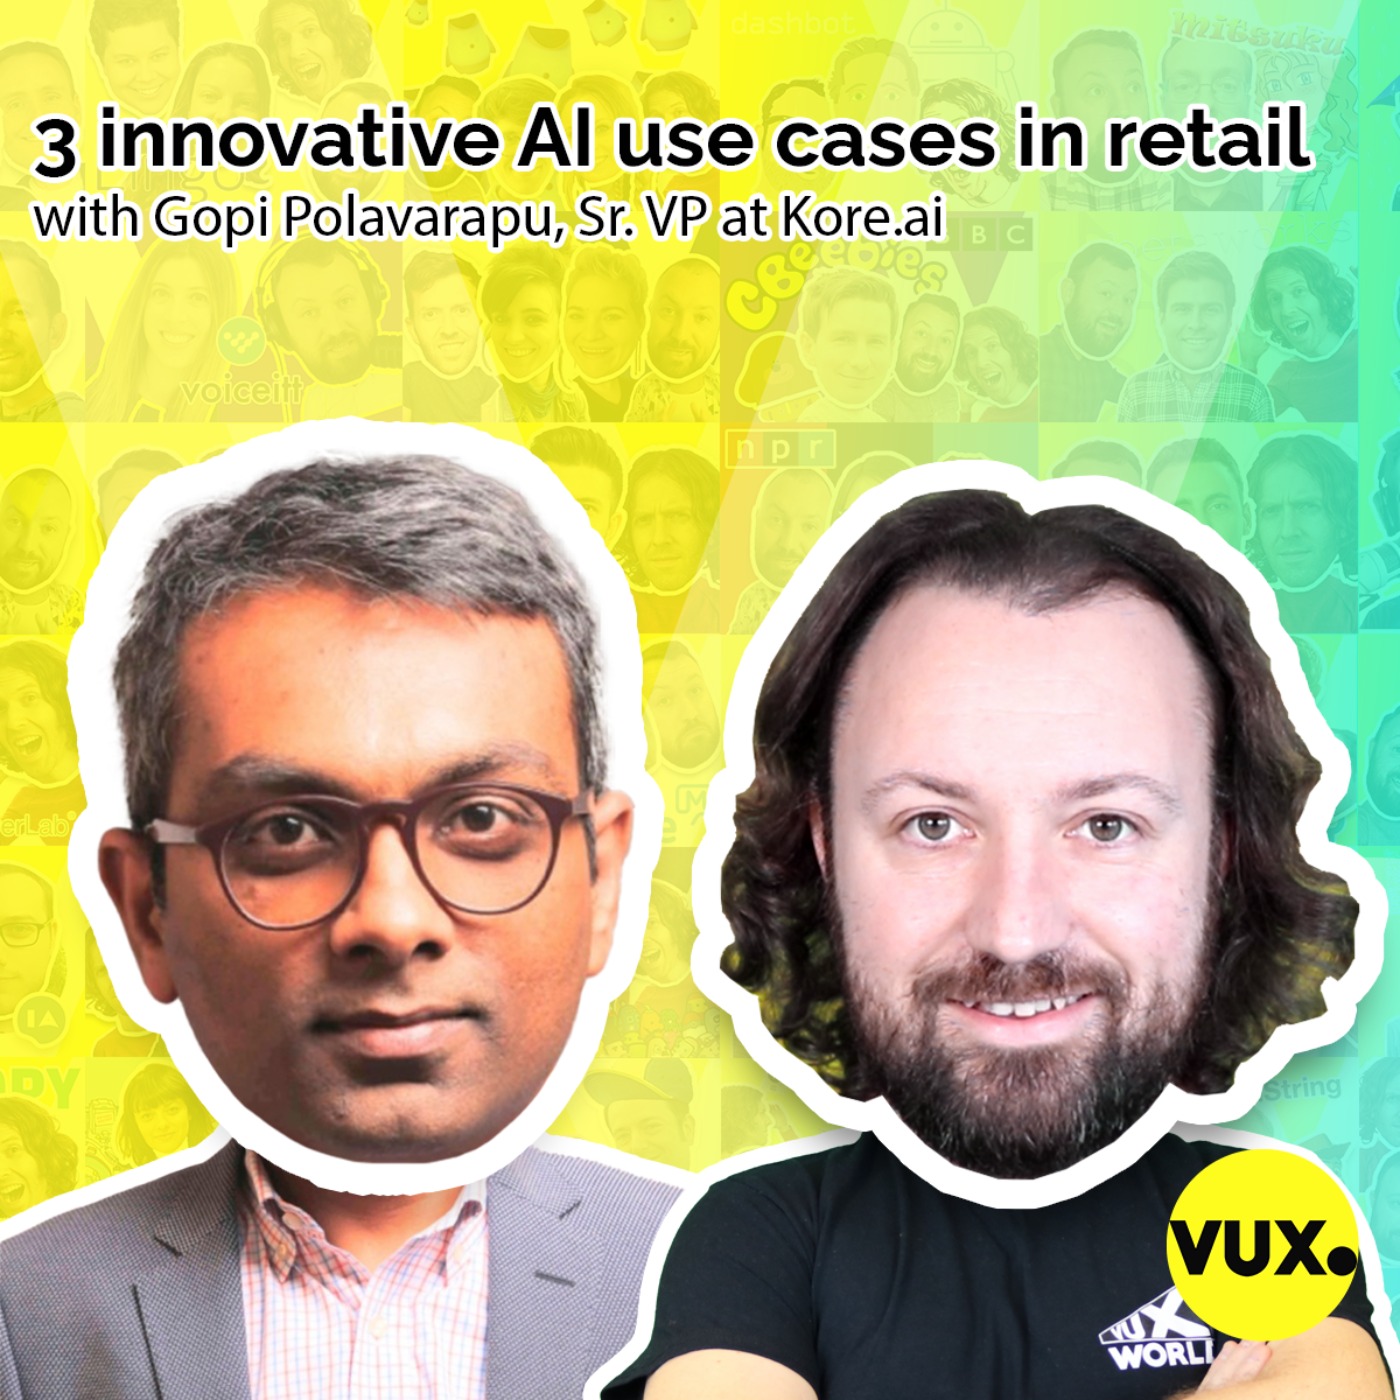 3 innovative AI use cases in retail with Gopi Polavarapu, Sr. VP at Kore.ai